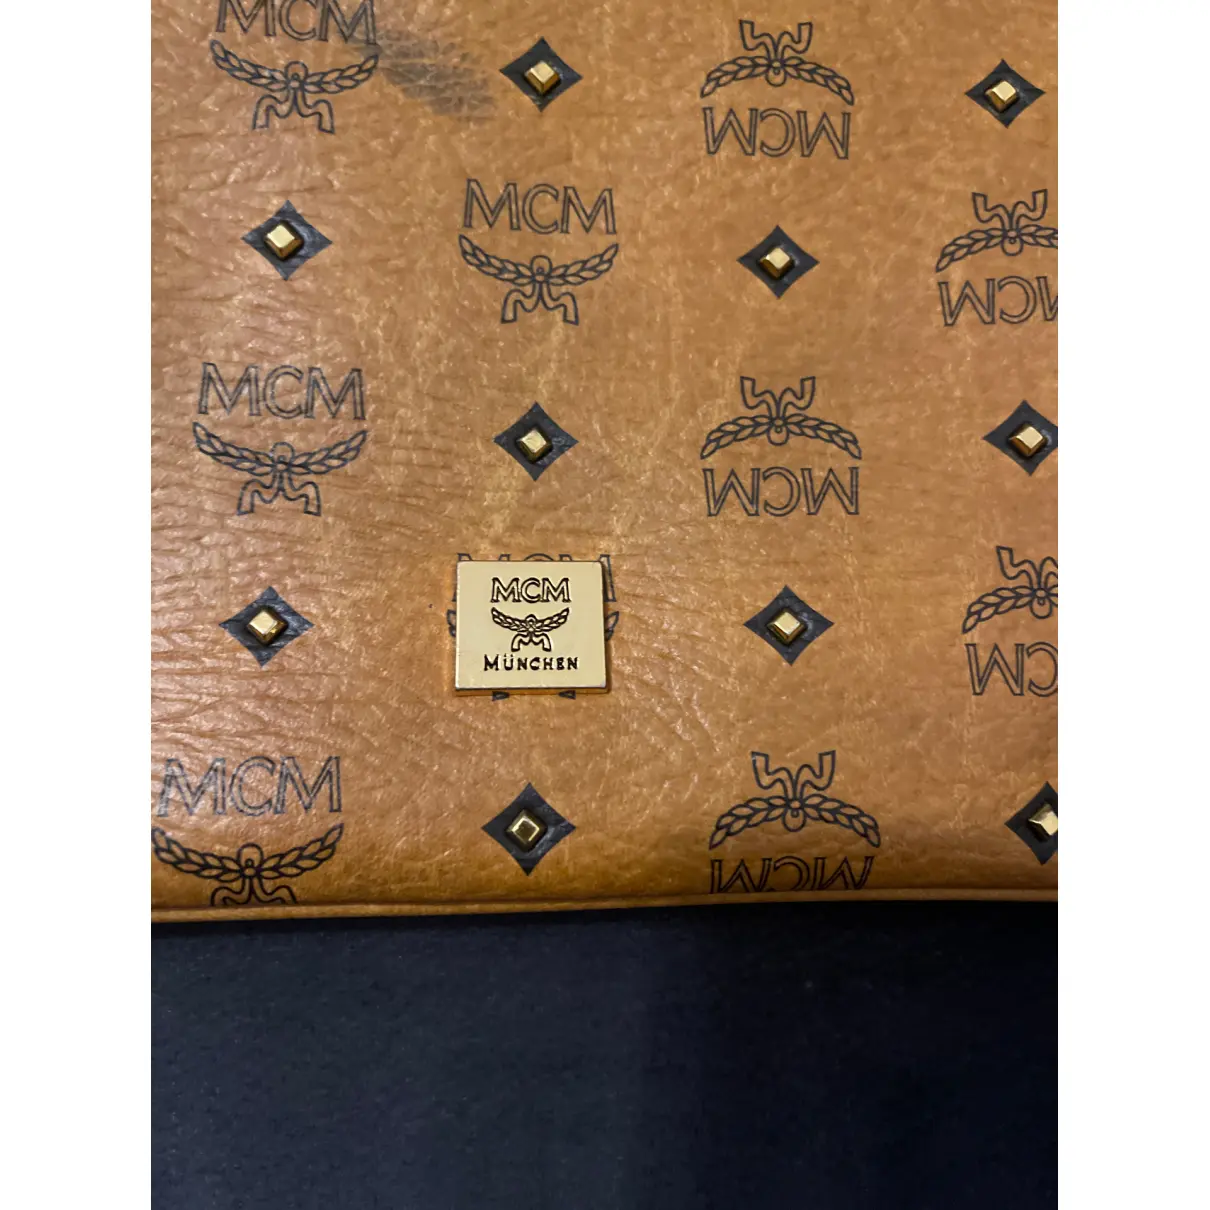 Buy MCM Vegan leather handbag online